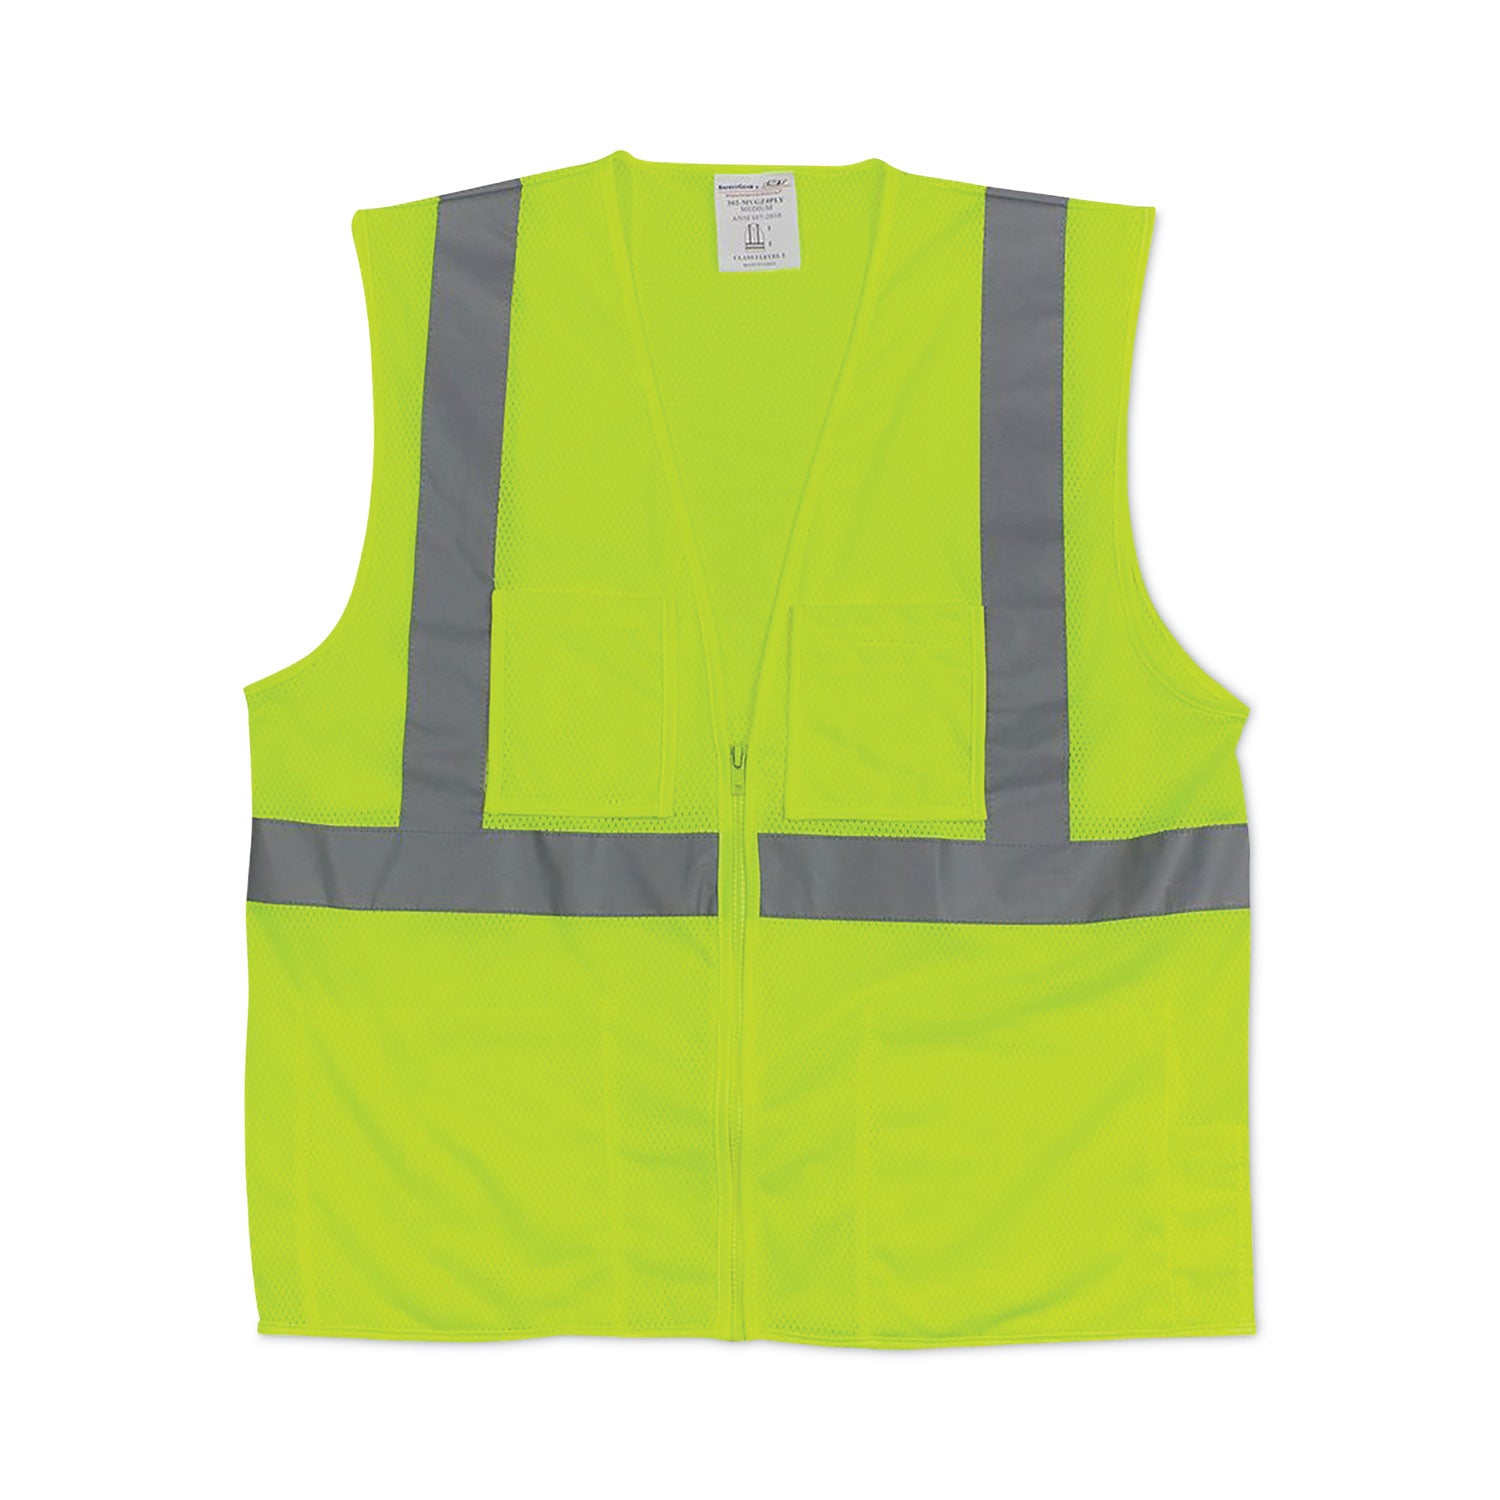 zipper-safety-vest-2x-large-hi-viz-lime-yellow_pid302mvgzly2x - 1